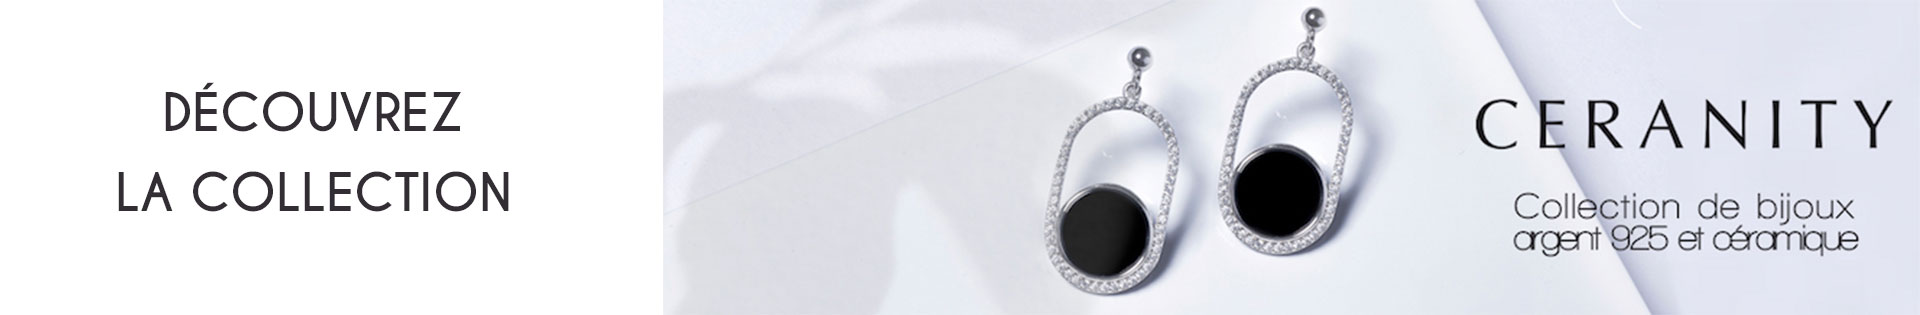 Bracelet - Ceramique - Ceranity Silver - or 375 millièmes - or 750 millièmes